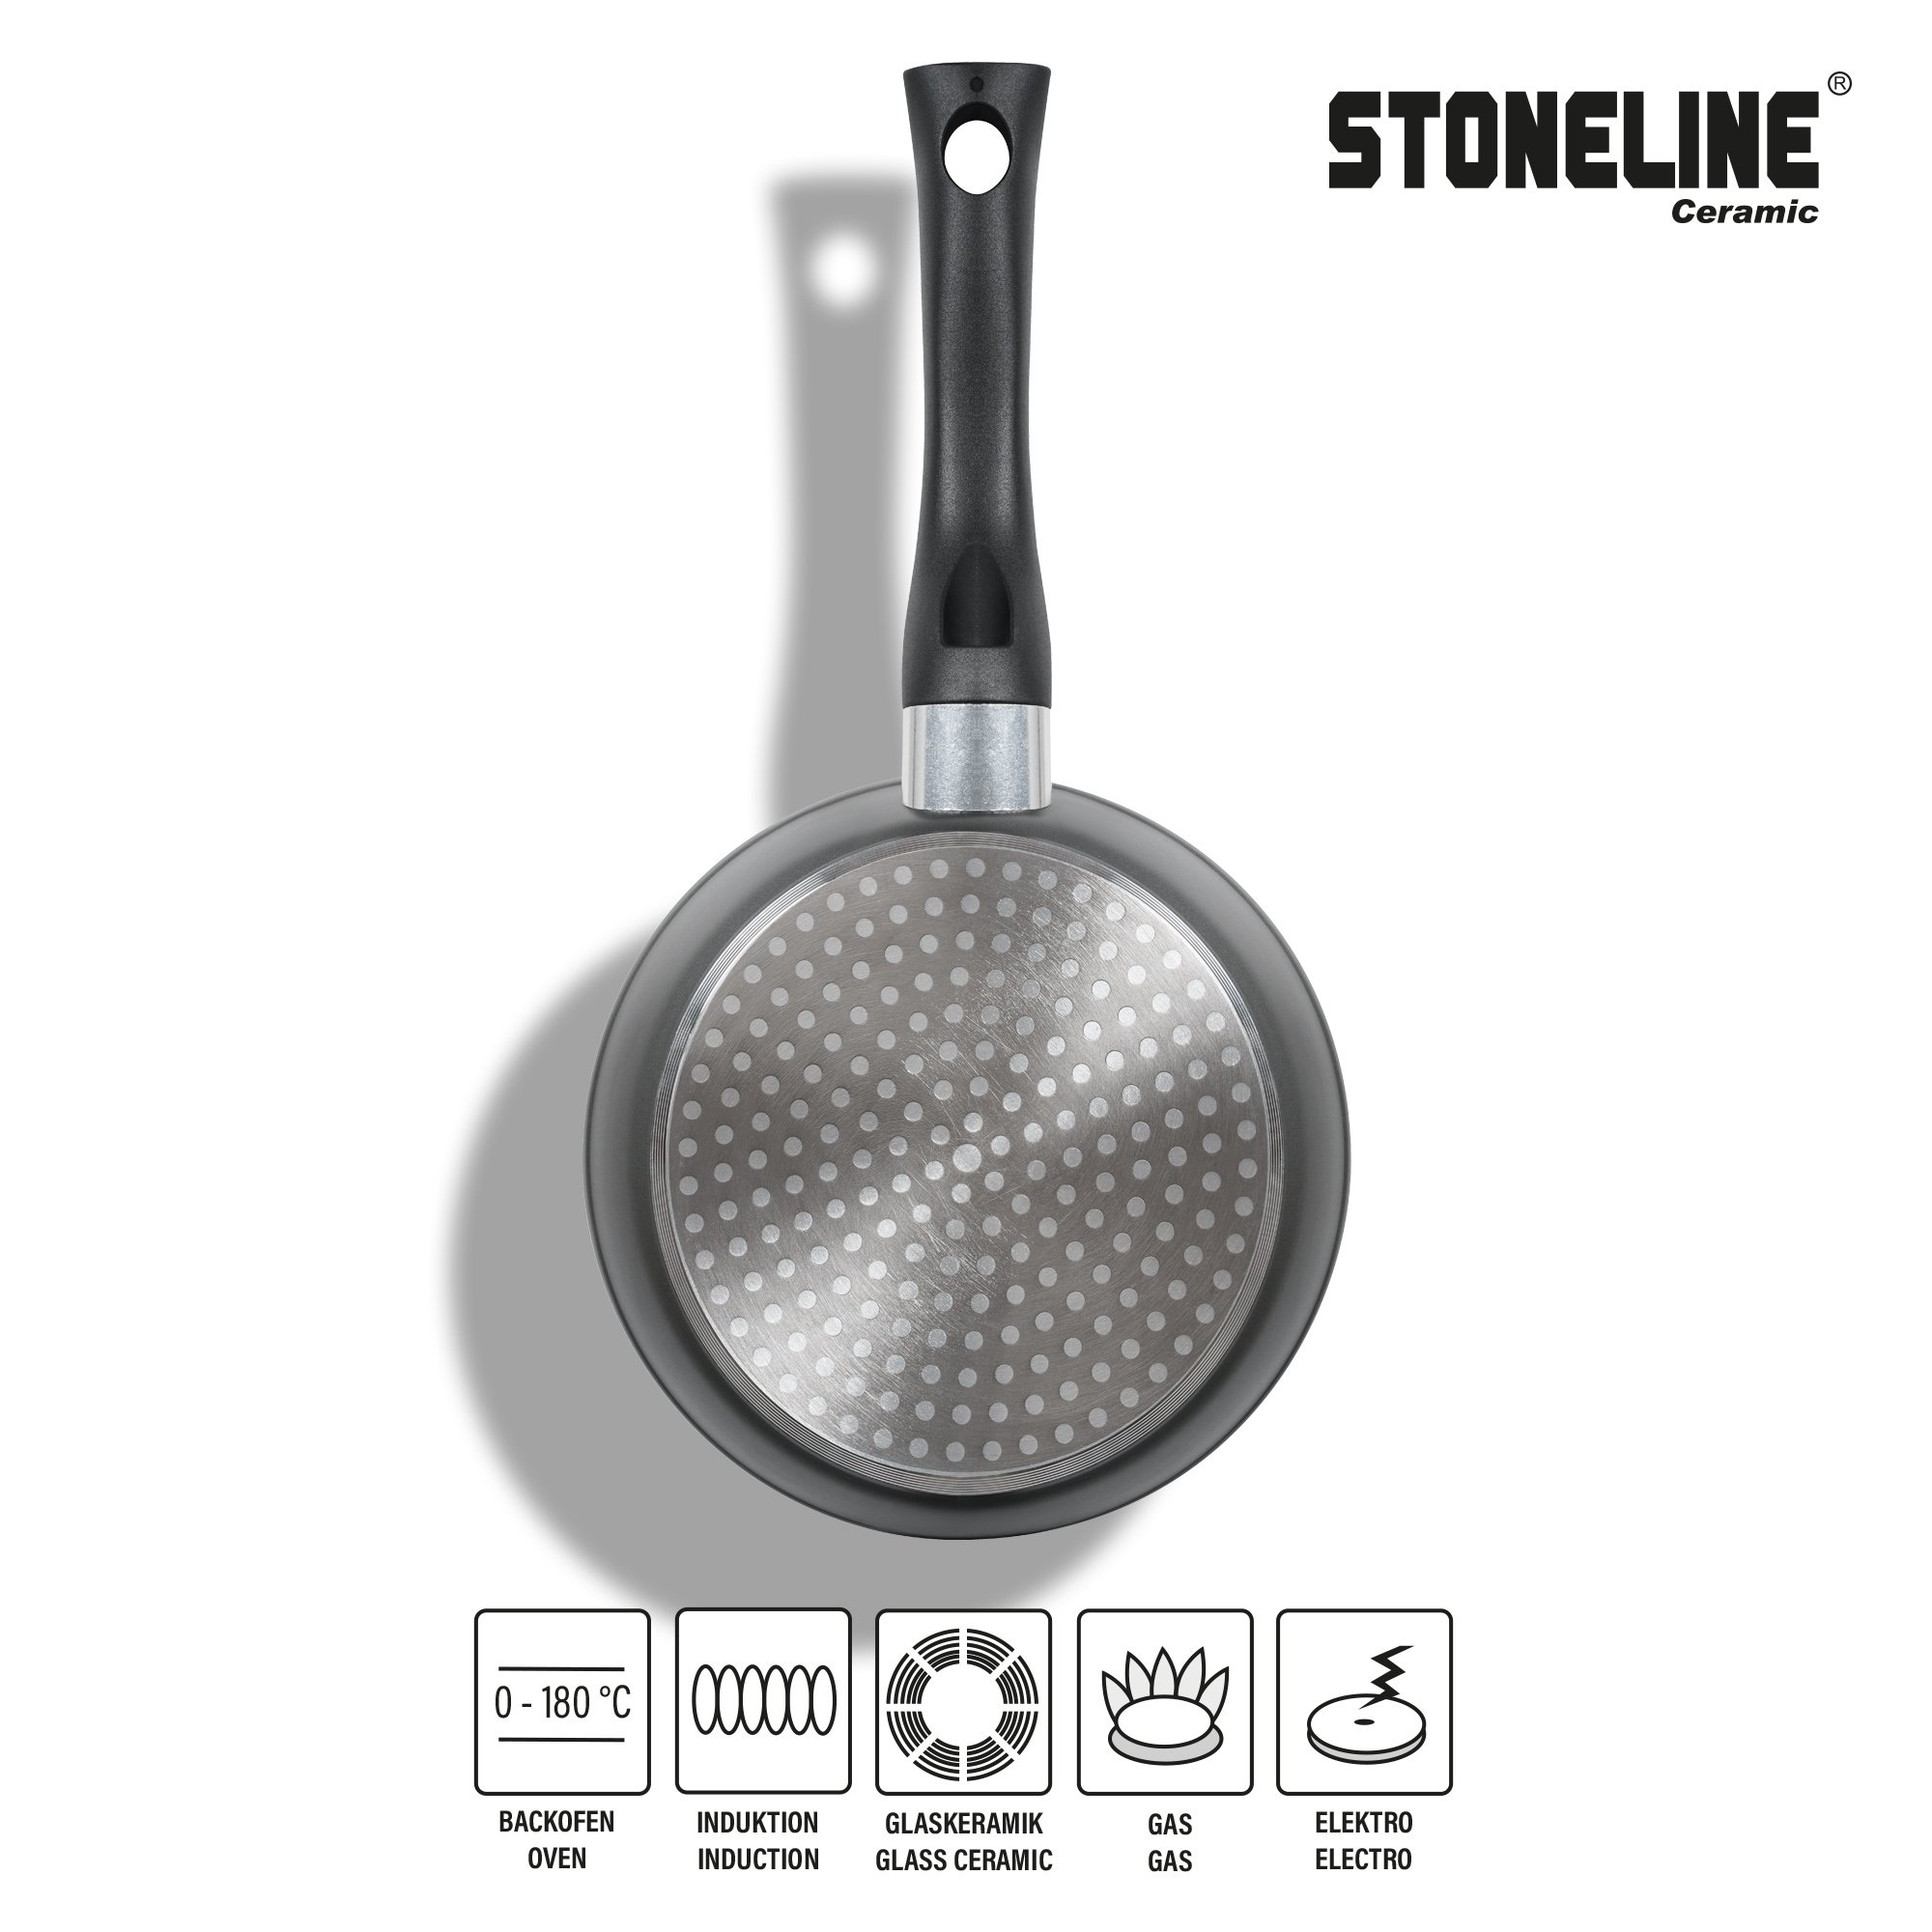 STONELINE® CERAMIC Frying Pan 16 cm, Non-Stick Pan | CERAMIC Cookware